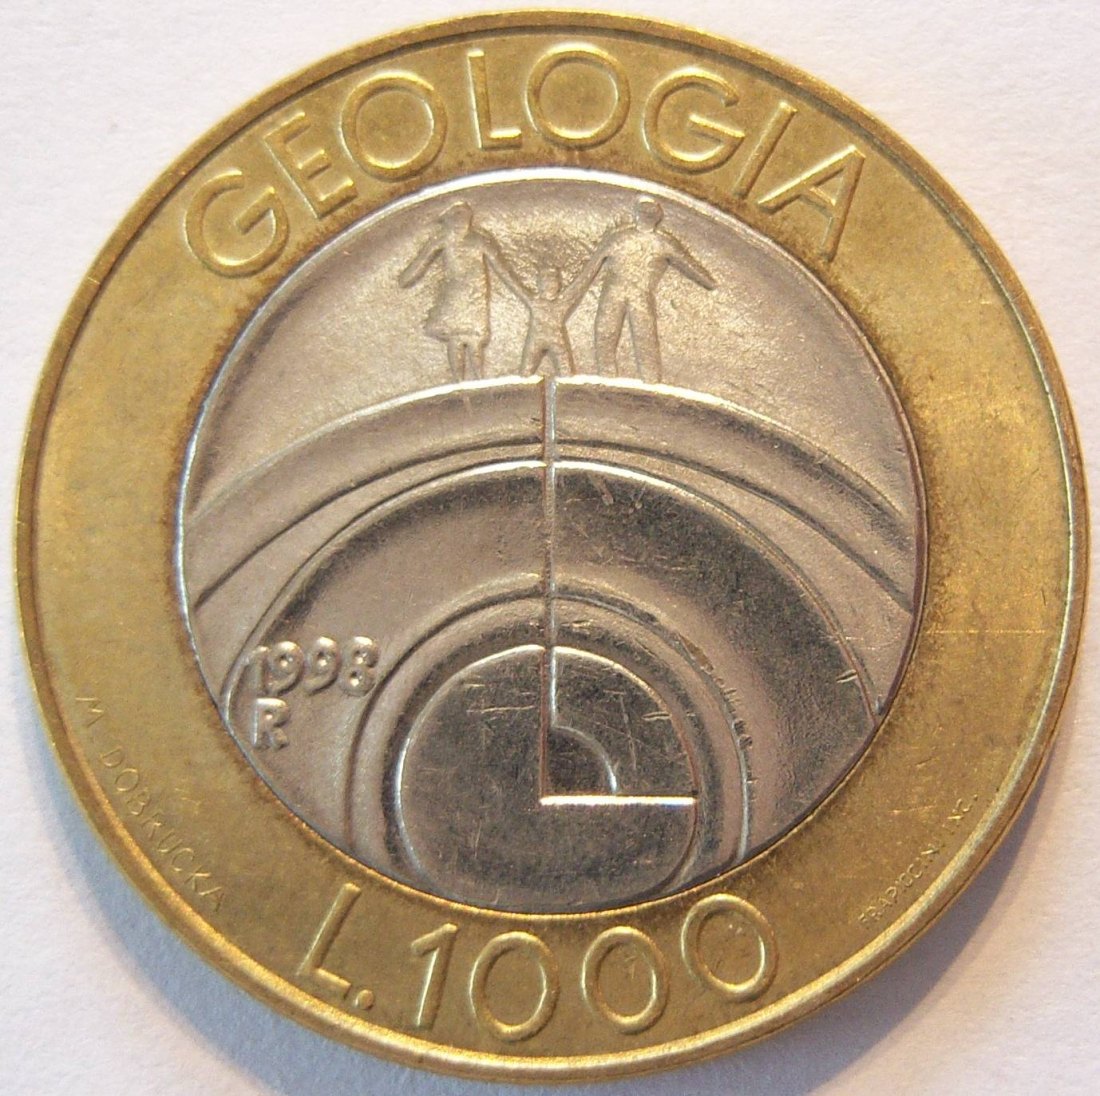  San Marino 1000 Lire 1998   